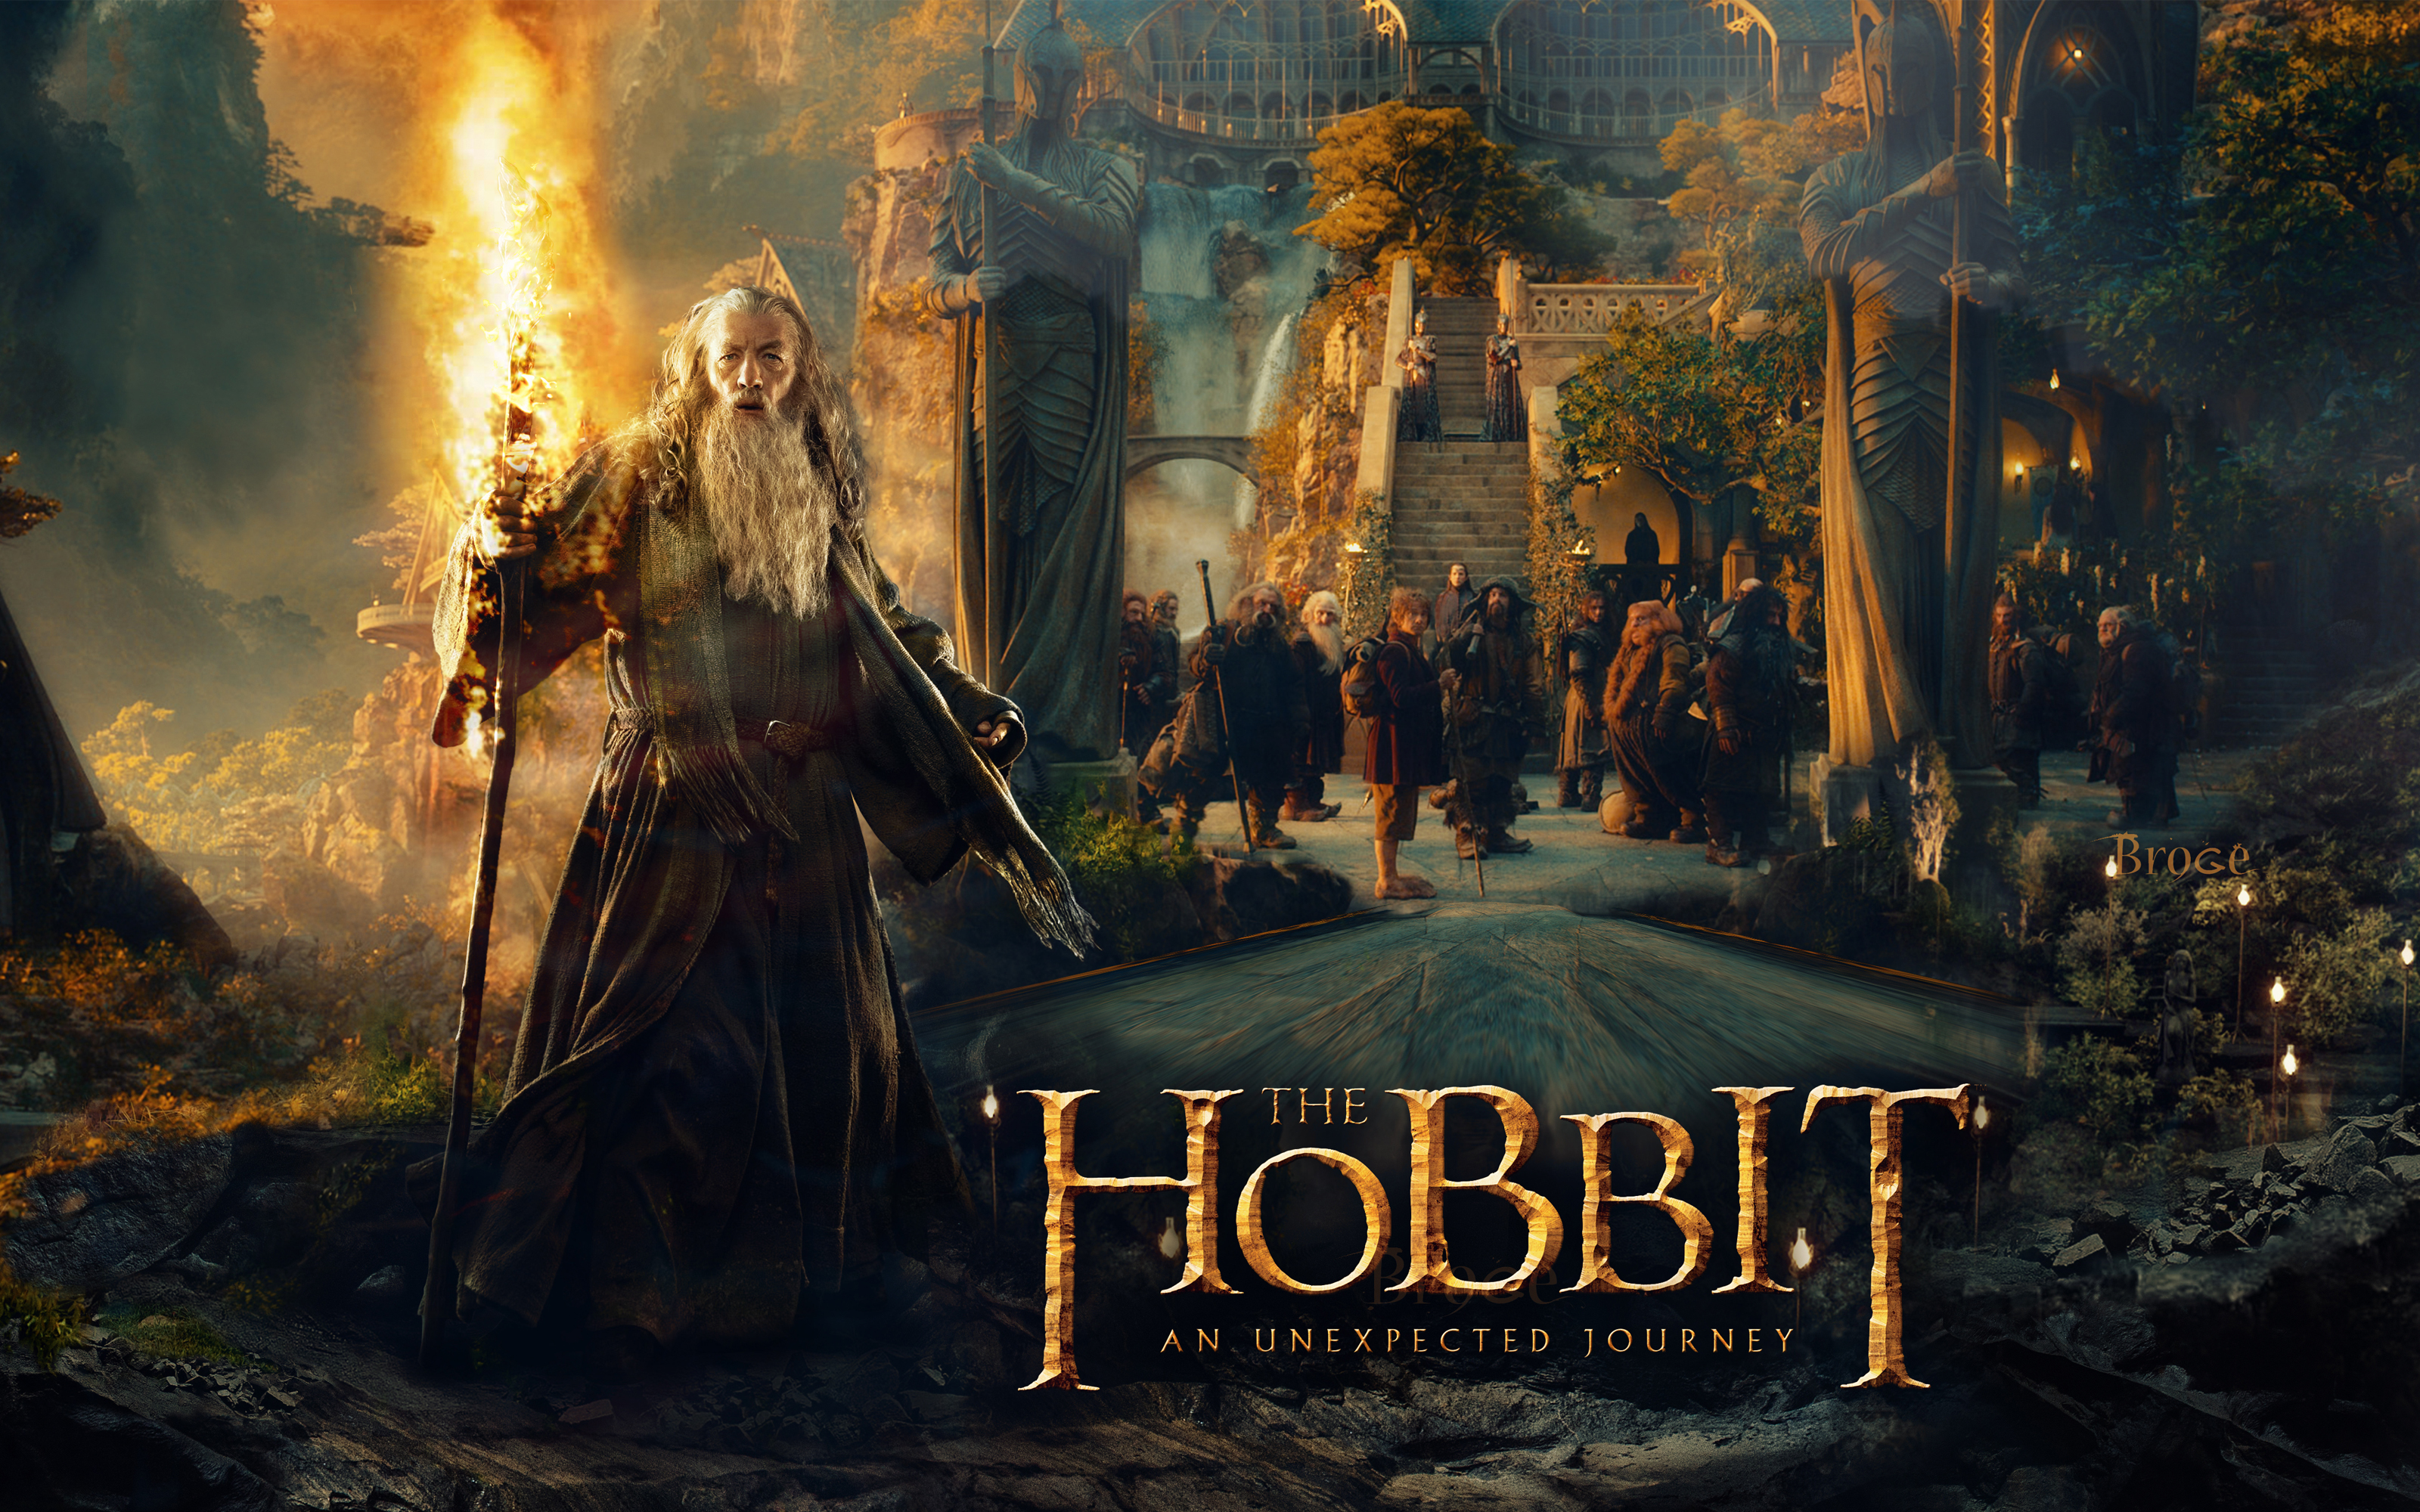 The Hobbit: An Unexpected Journey Backgrounds, Compatible - PC, Mobile, Gadgets| 3200x2000 px